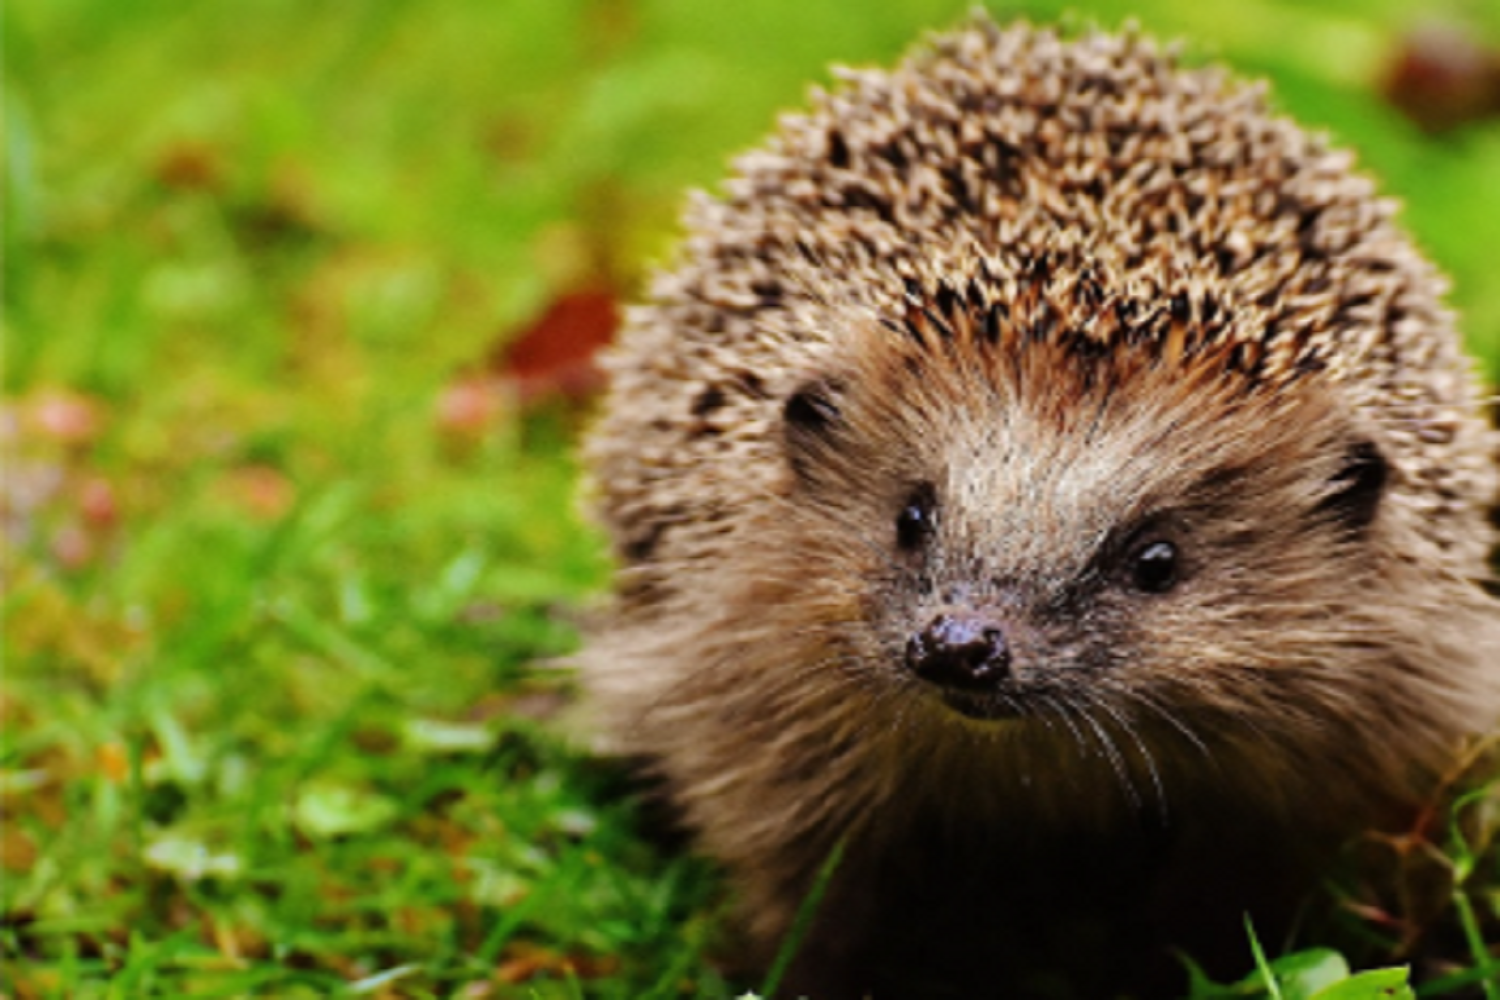 A hedgehog on a green field